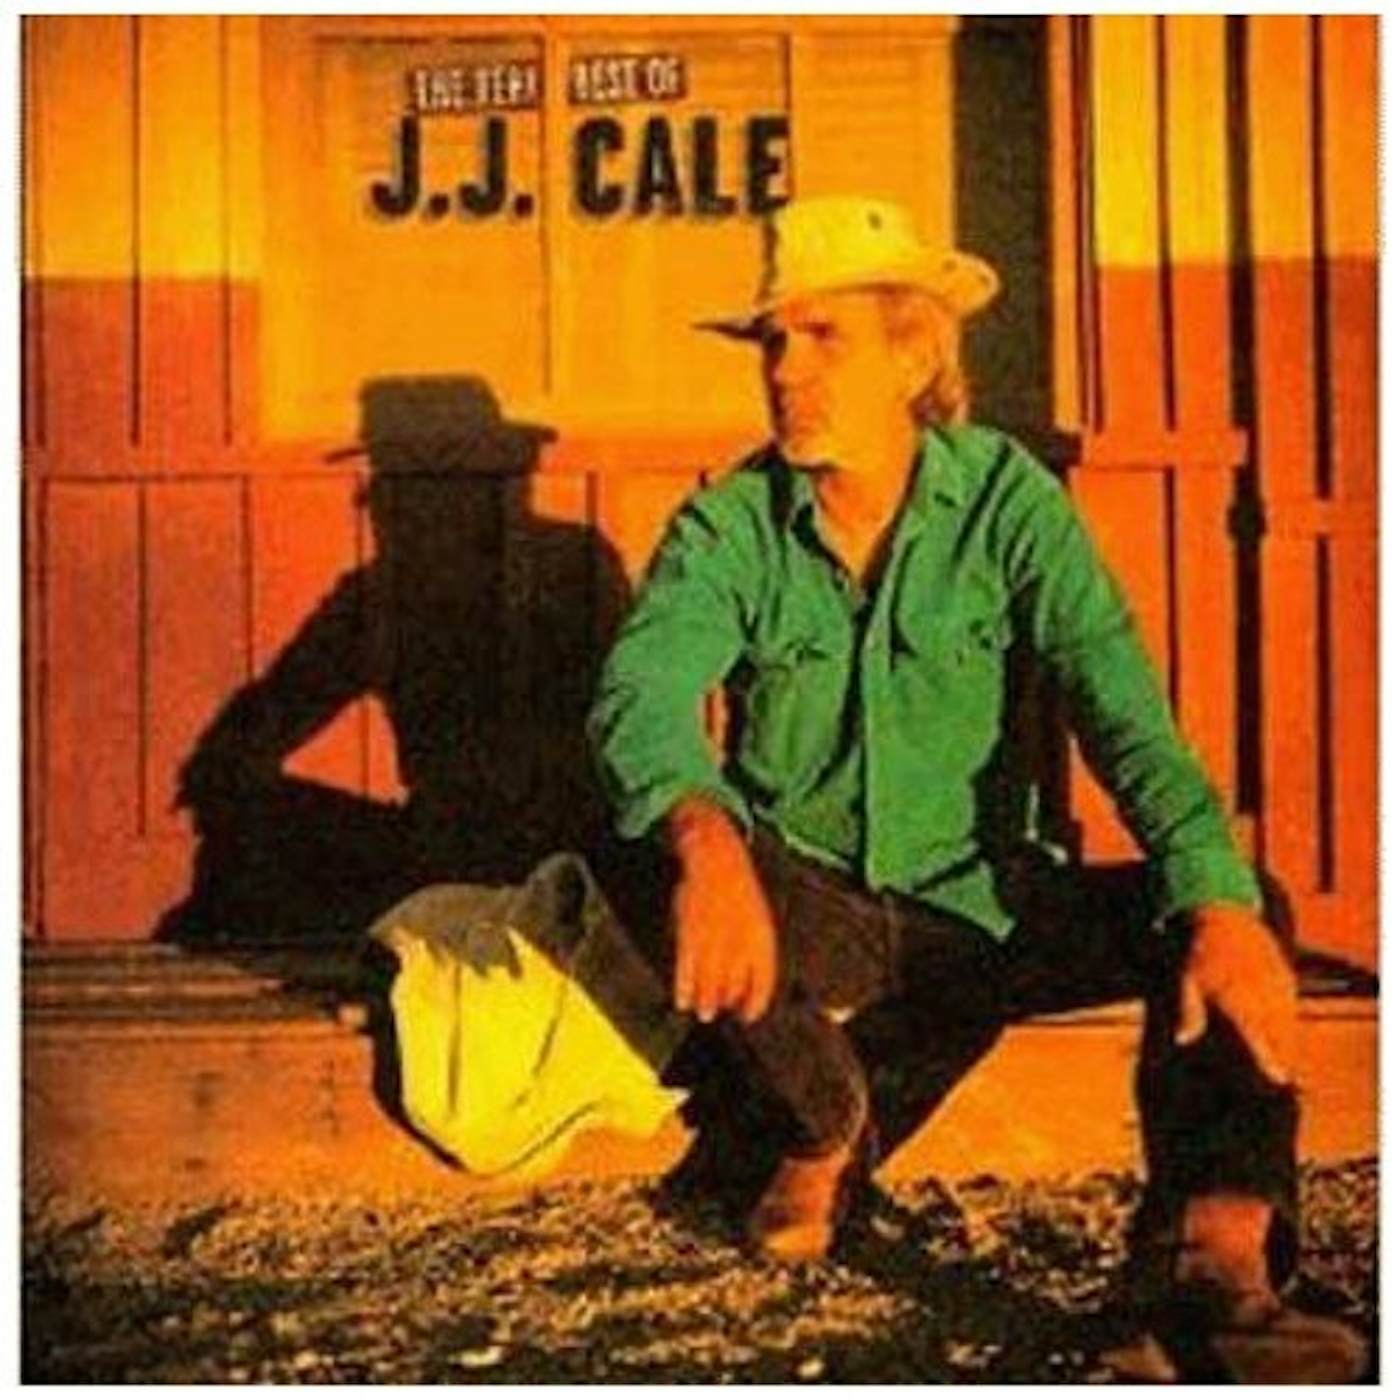 J.J. Cale DEFINITIVE COLLECTION CD